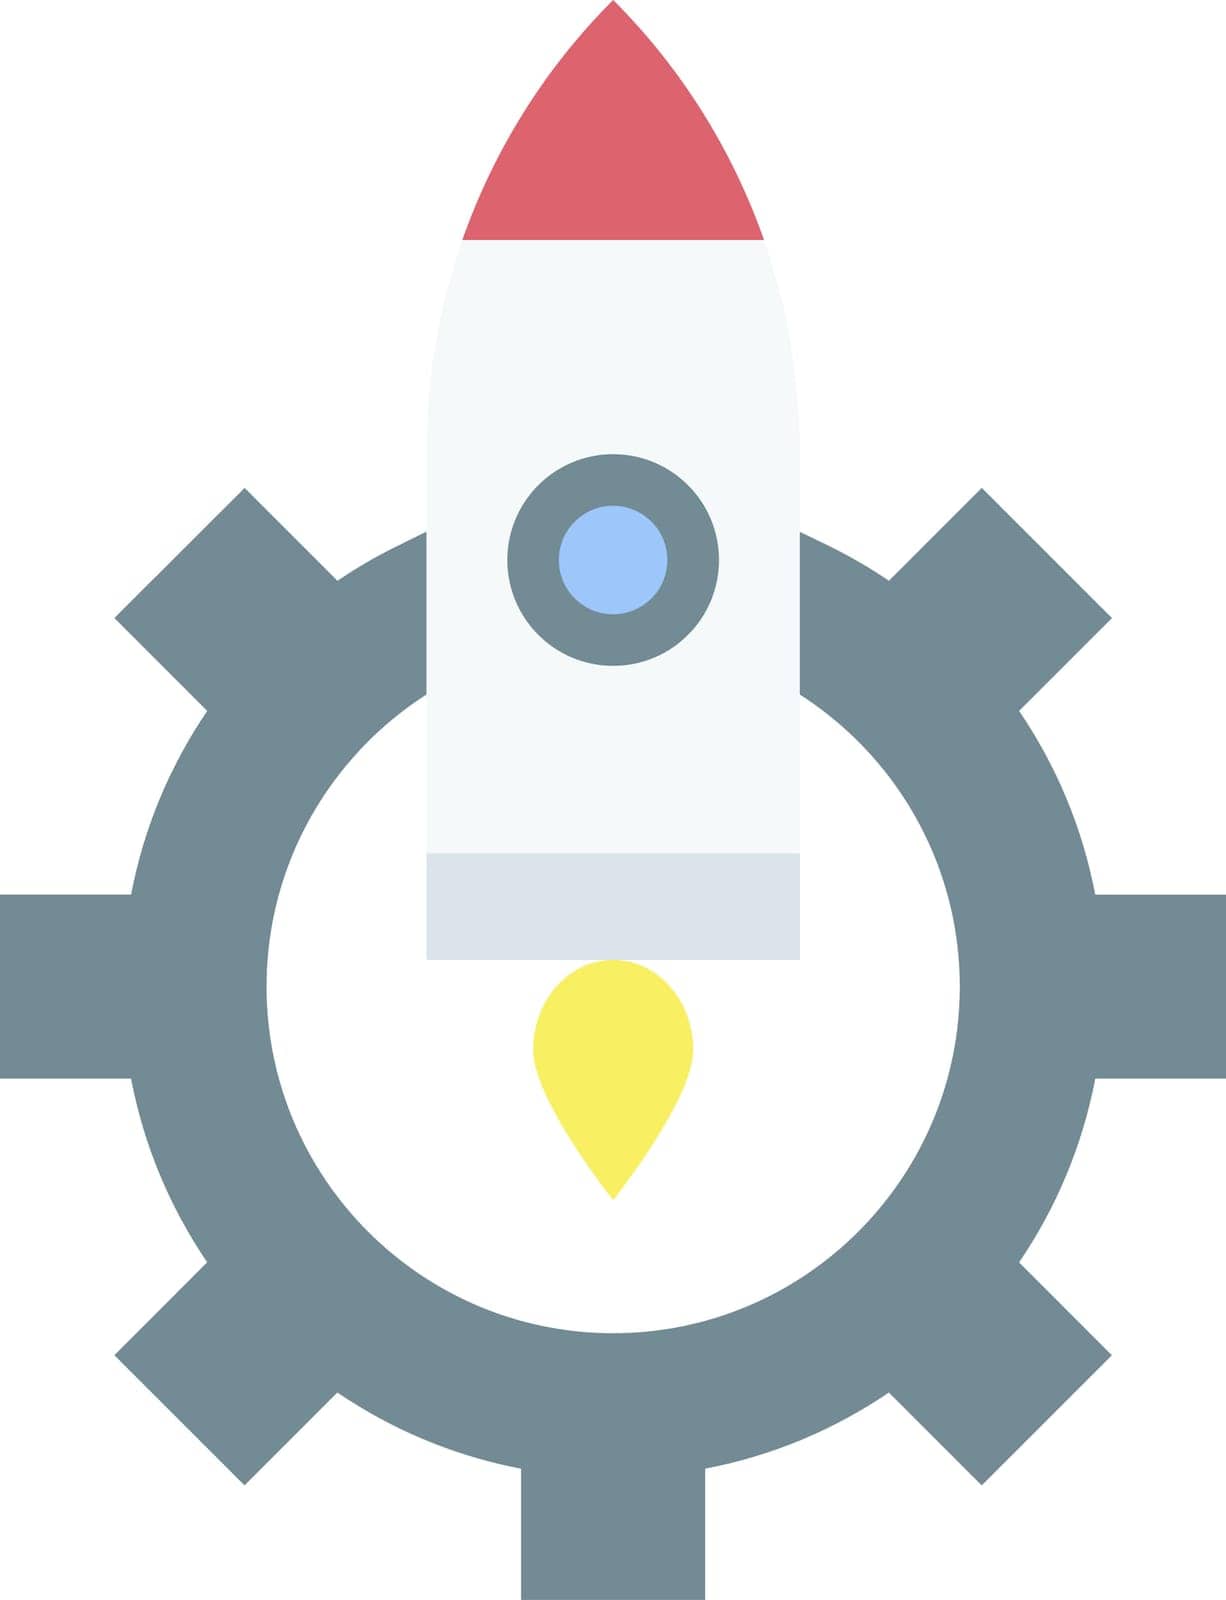 Launch Optimization Icon Image. by ICONBUNNY